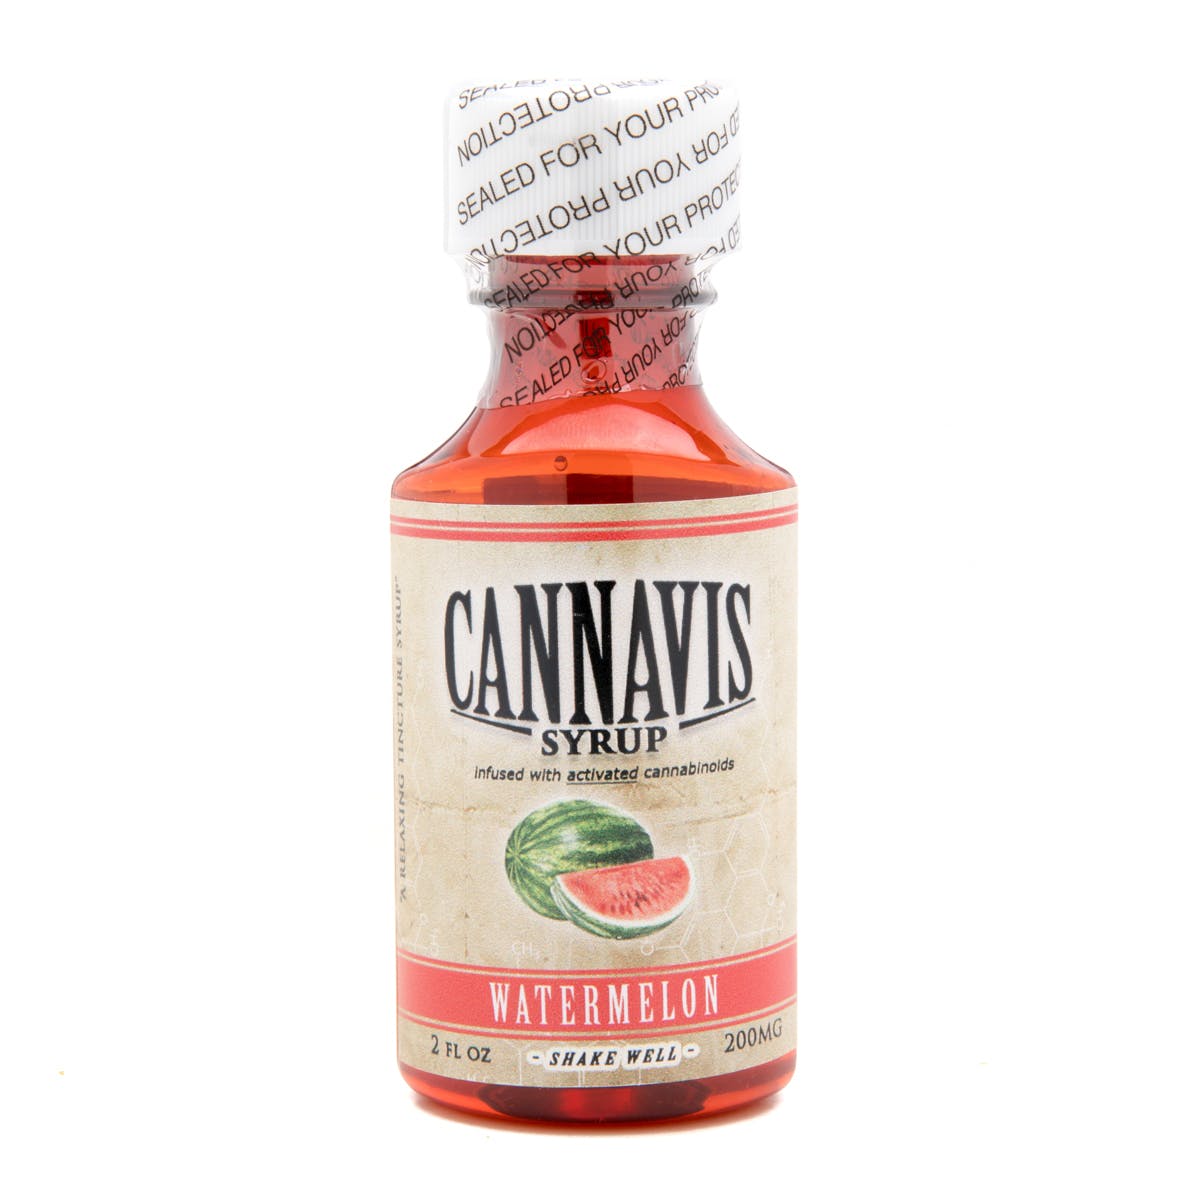 marijuana-dispensaries-gec-in-gardena-cannavis-syrup-2c-watermelon-200mg